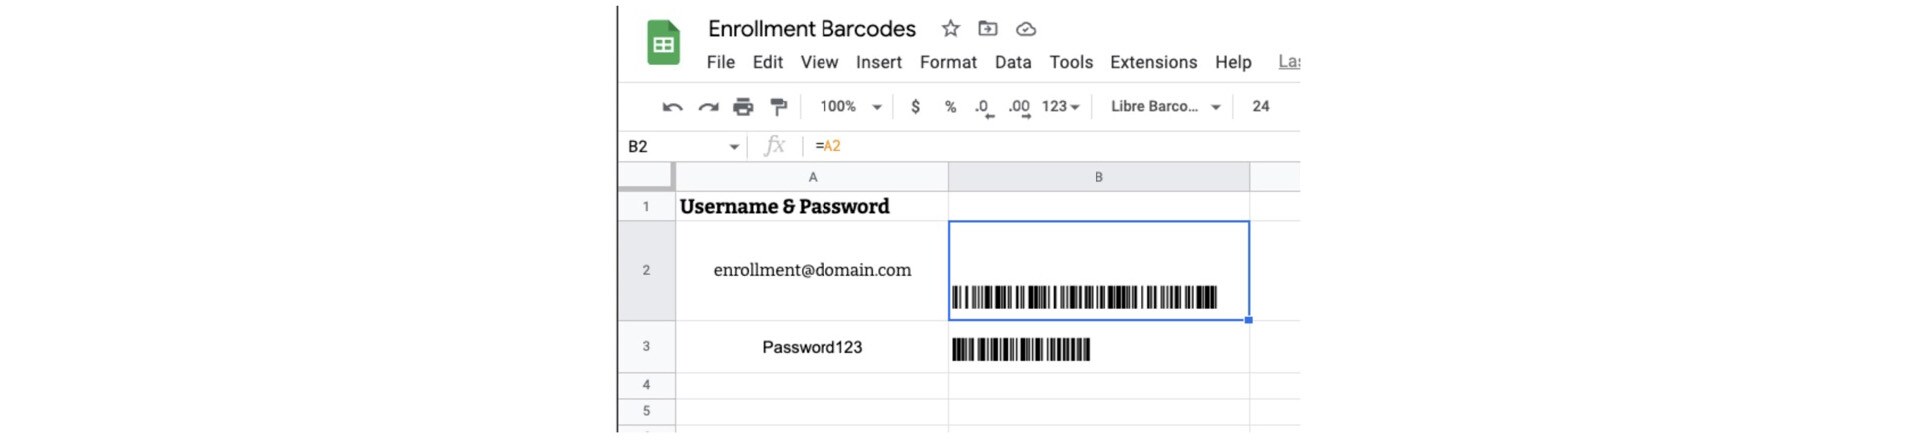 Method 1: Manual Enrollment Screenshot Barcode Scanners